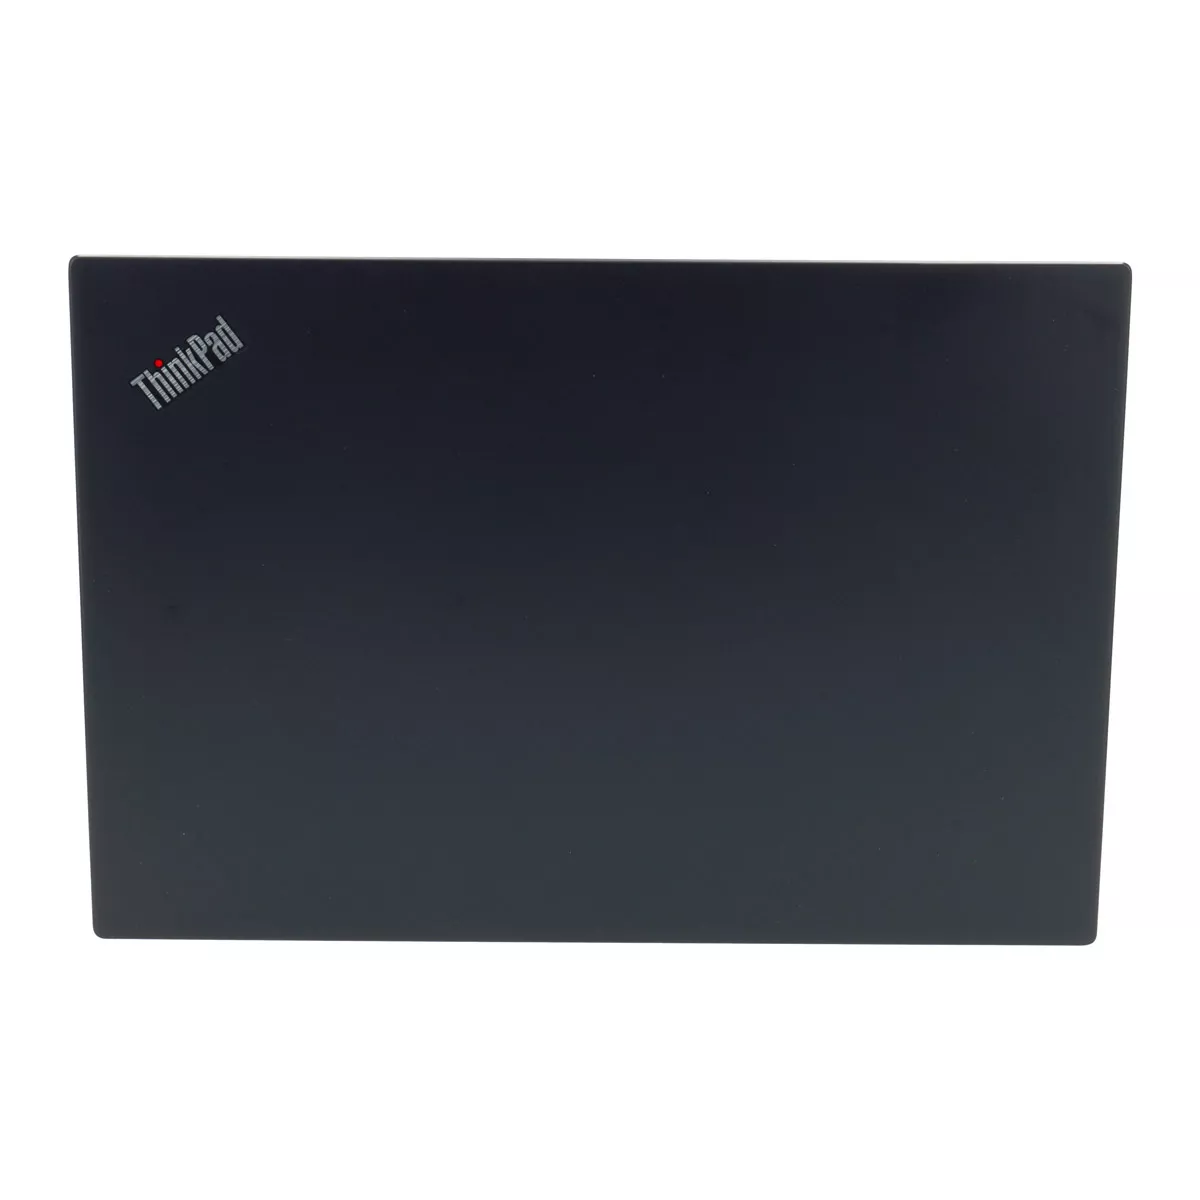 Lenovo ThinkPad T490s Core i5 8265U 8 GB 240 GB M.2 nVME SSD Touch Webcam A+